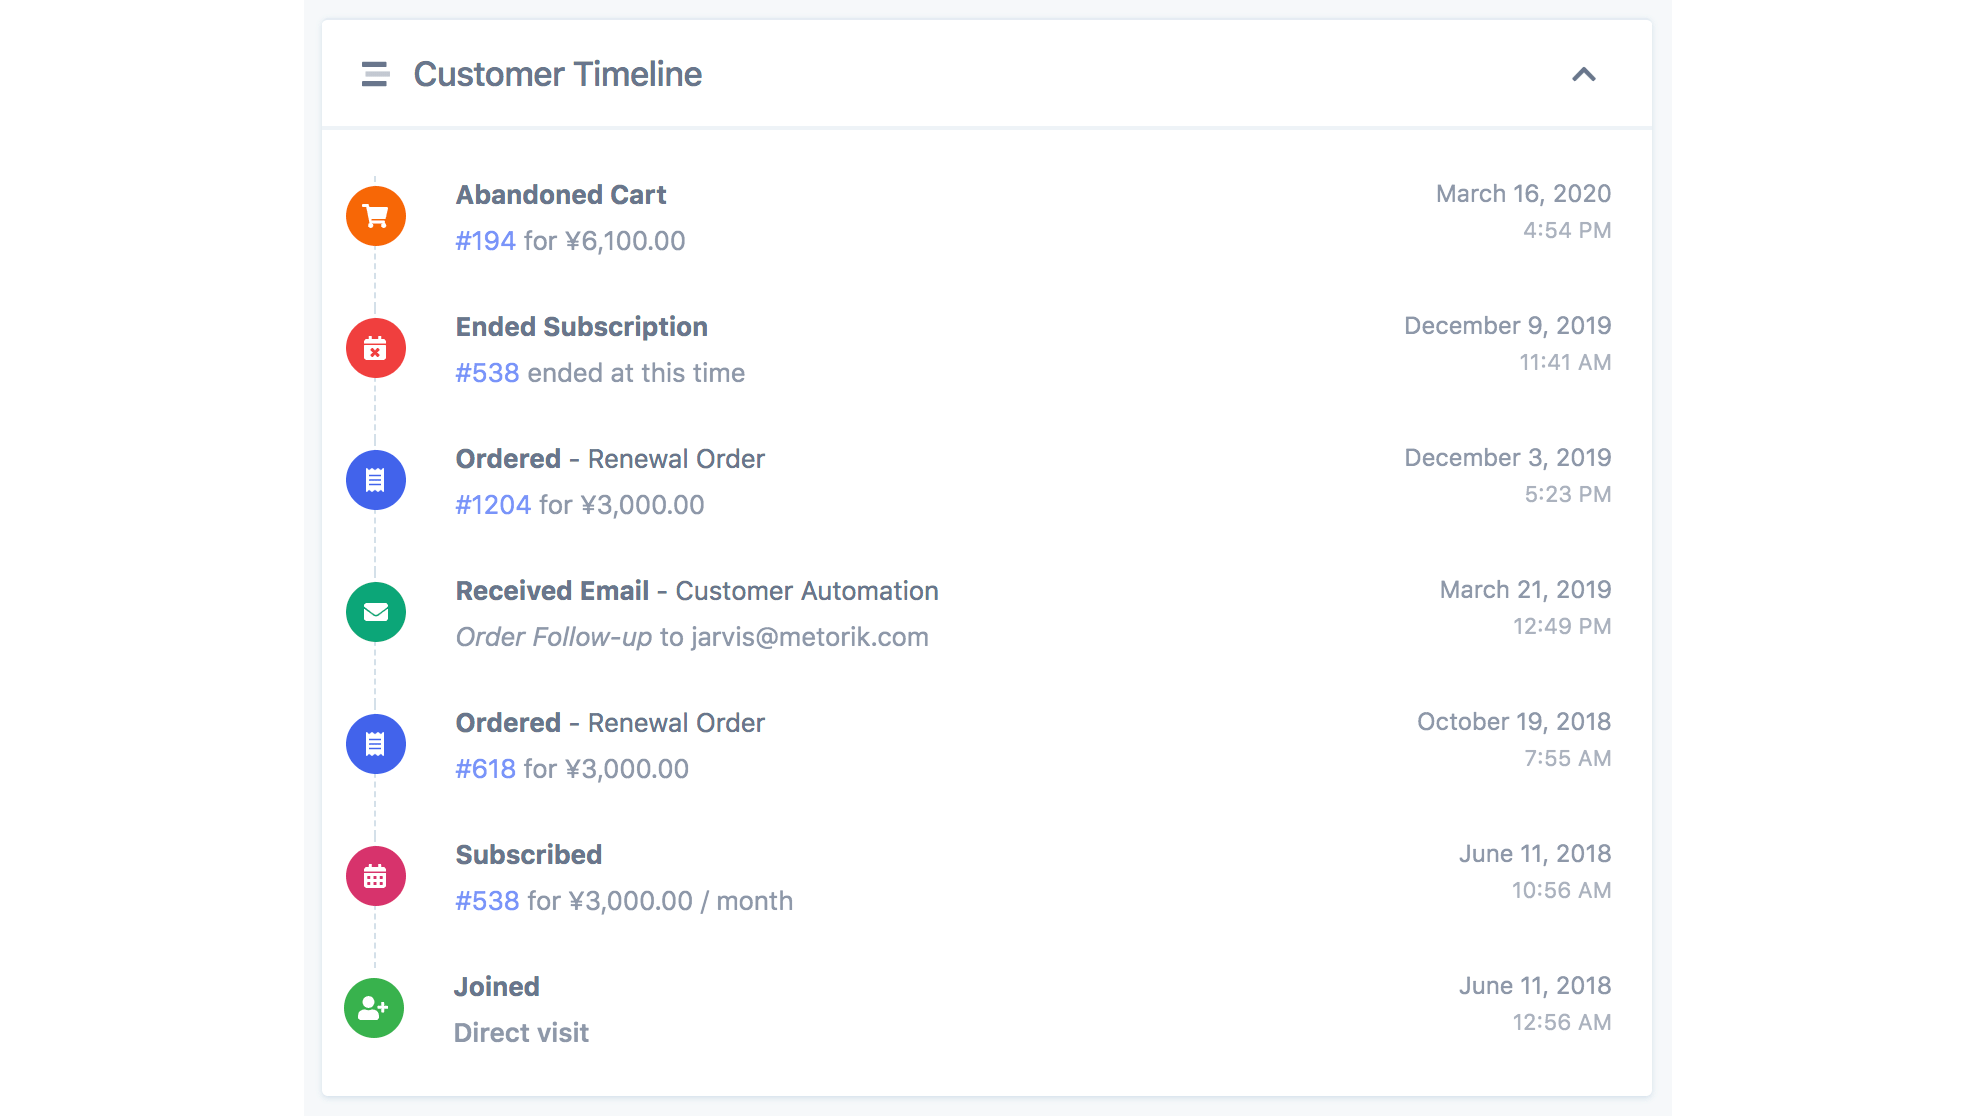 Customer timeline screenshot from app